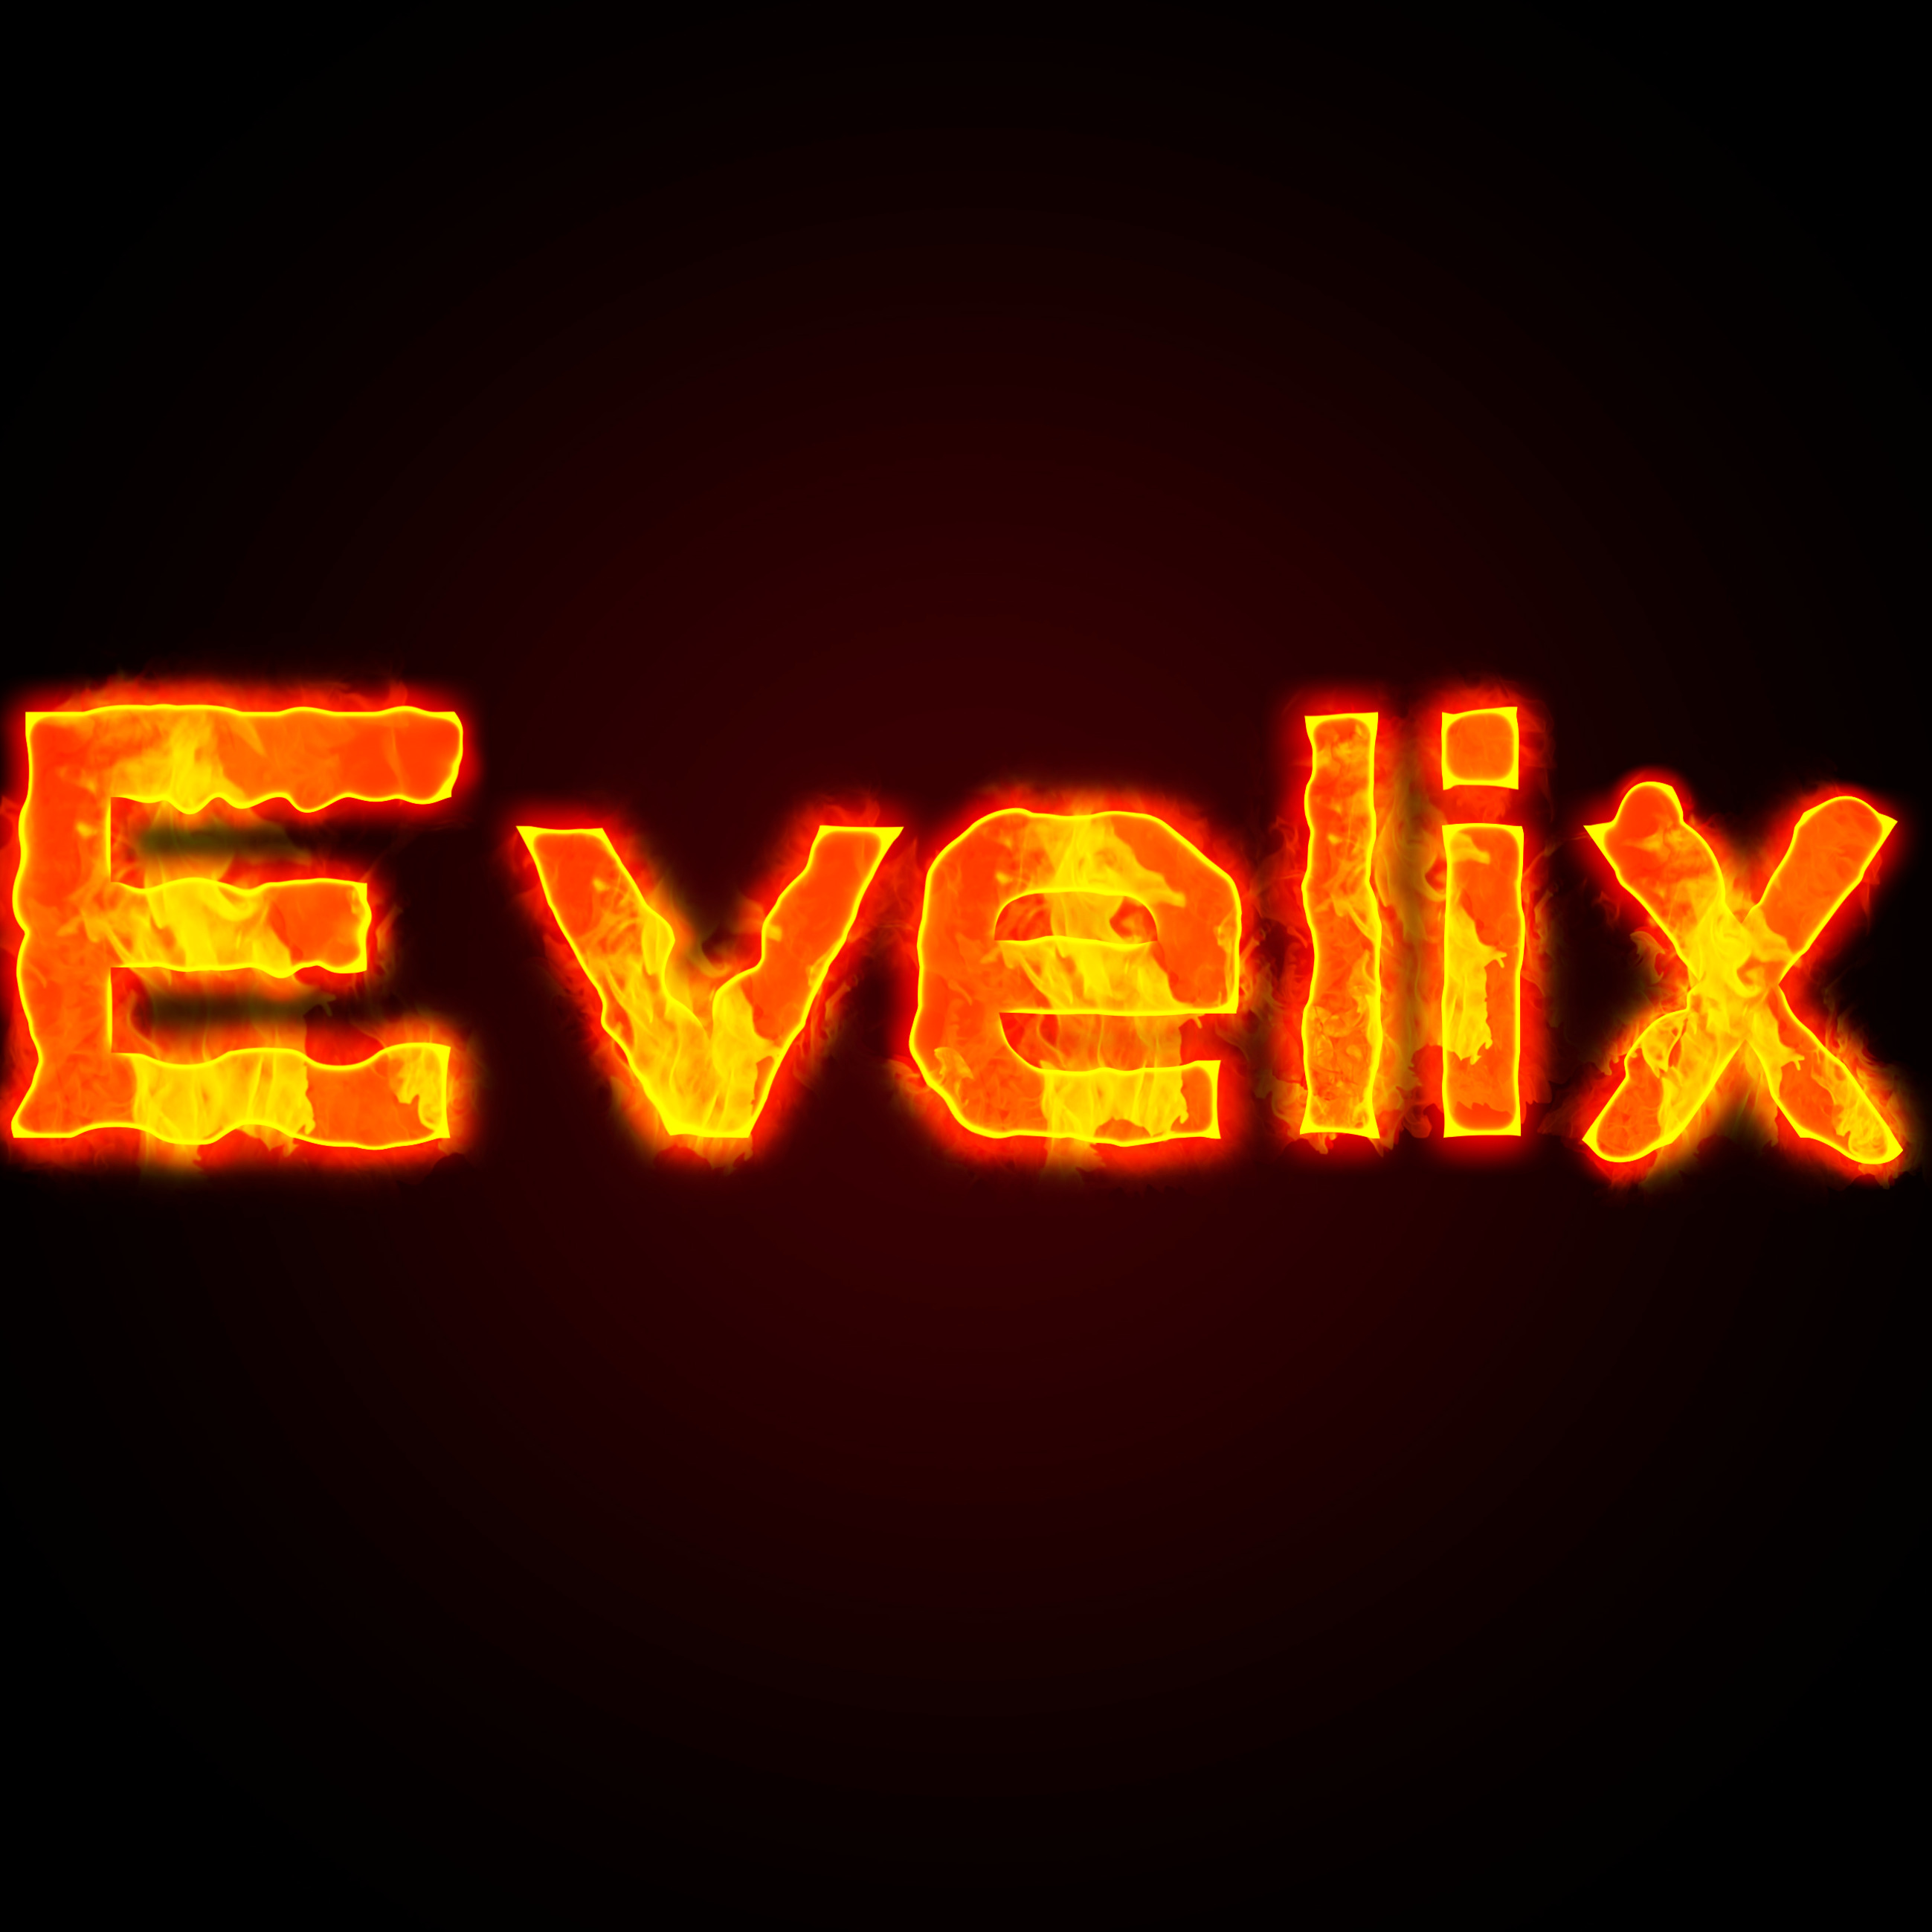 Evelix